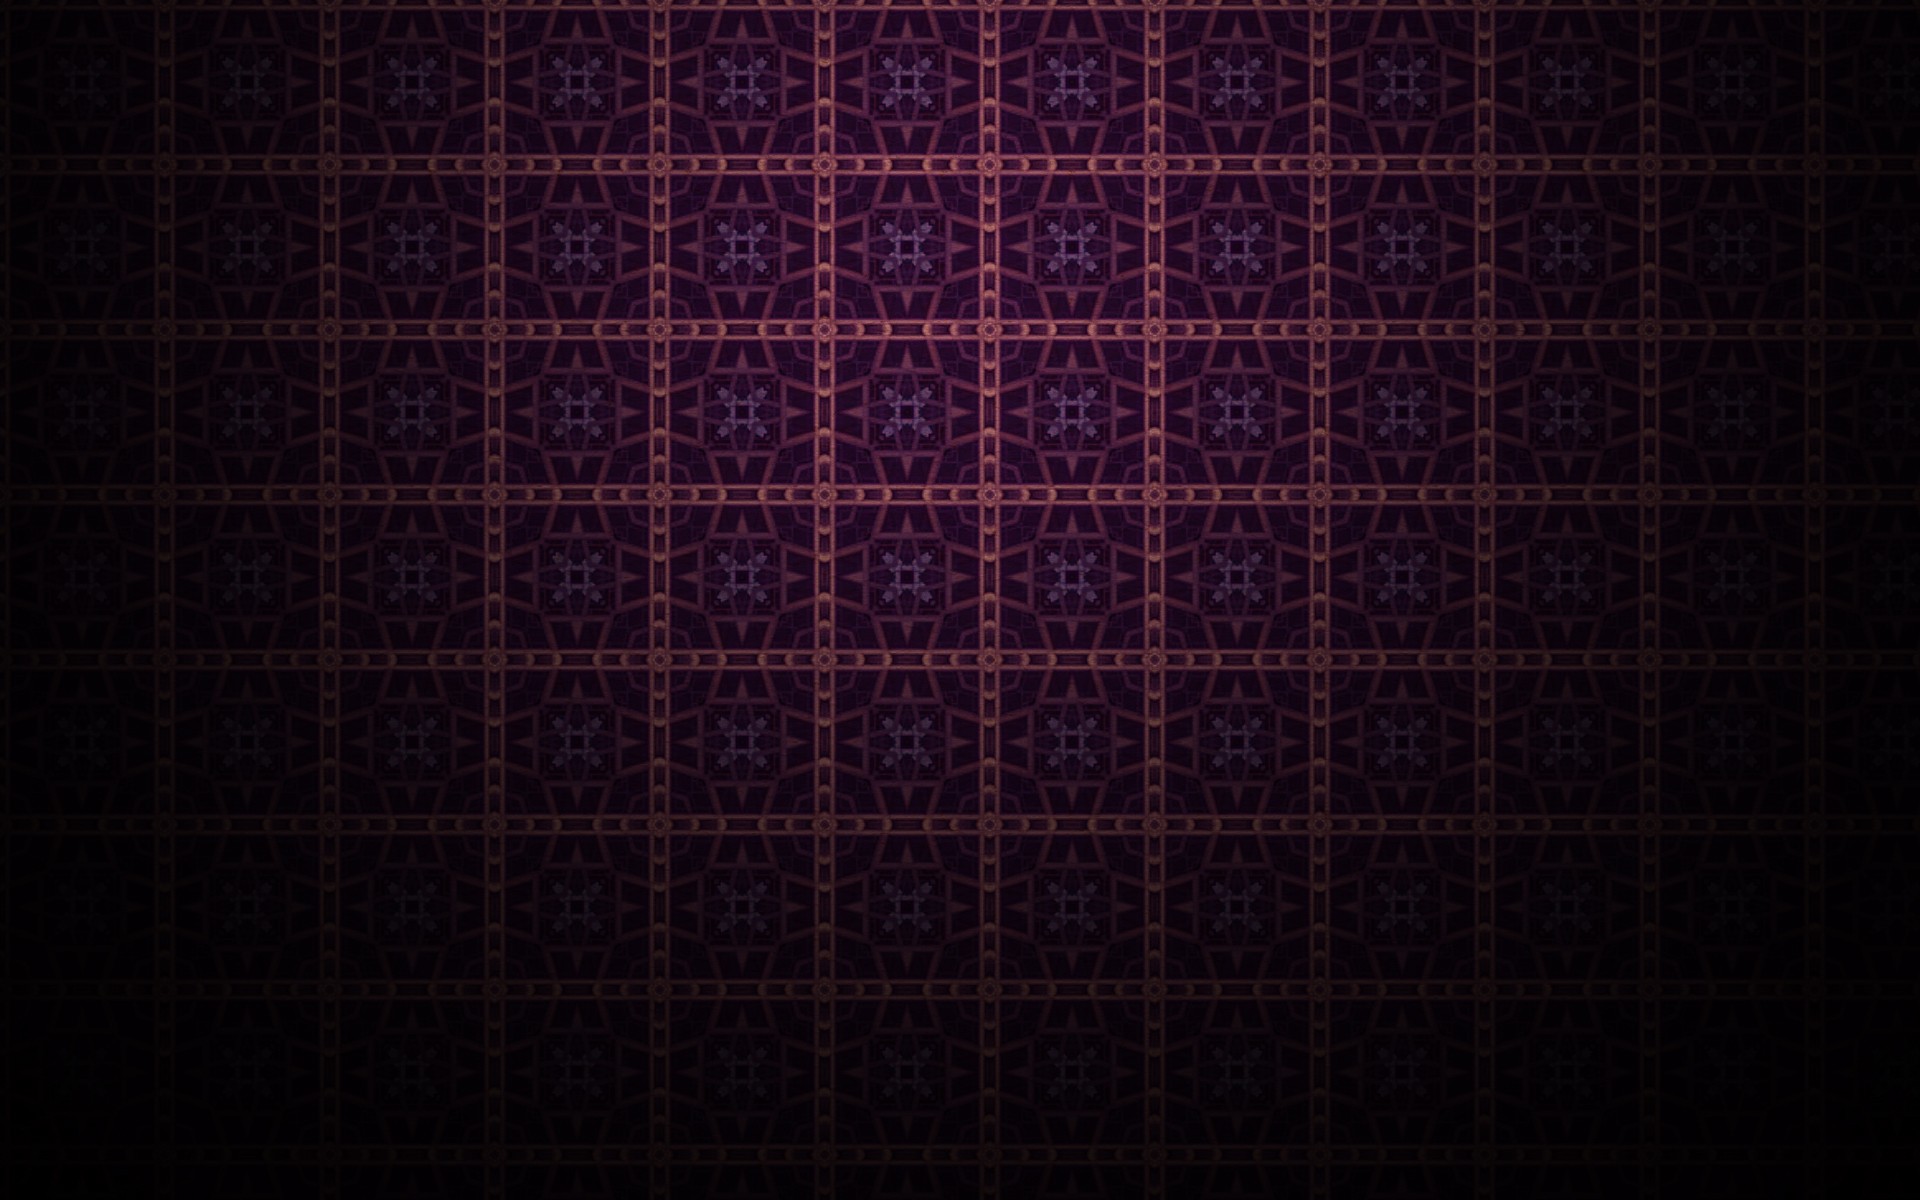   static minimalistic pattern patterns backgrounds hd wallpapersjpg 1920x1200